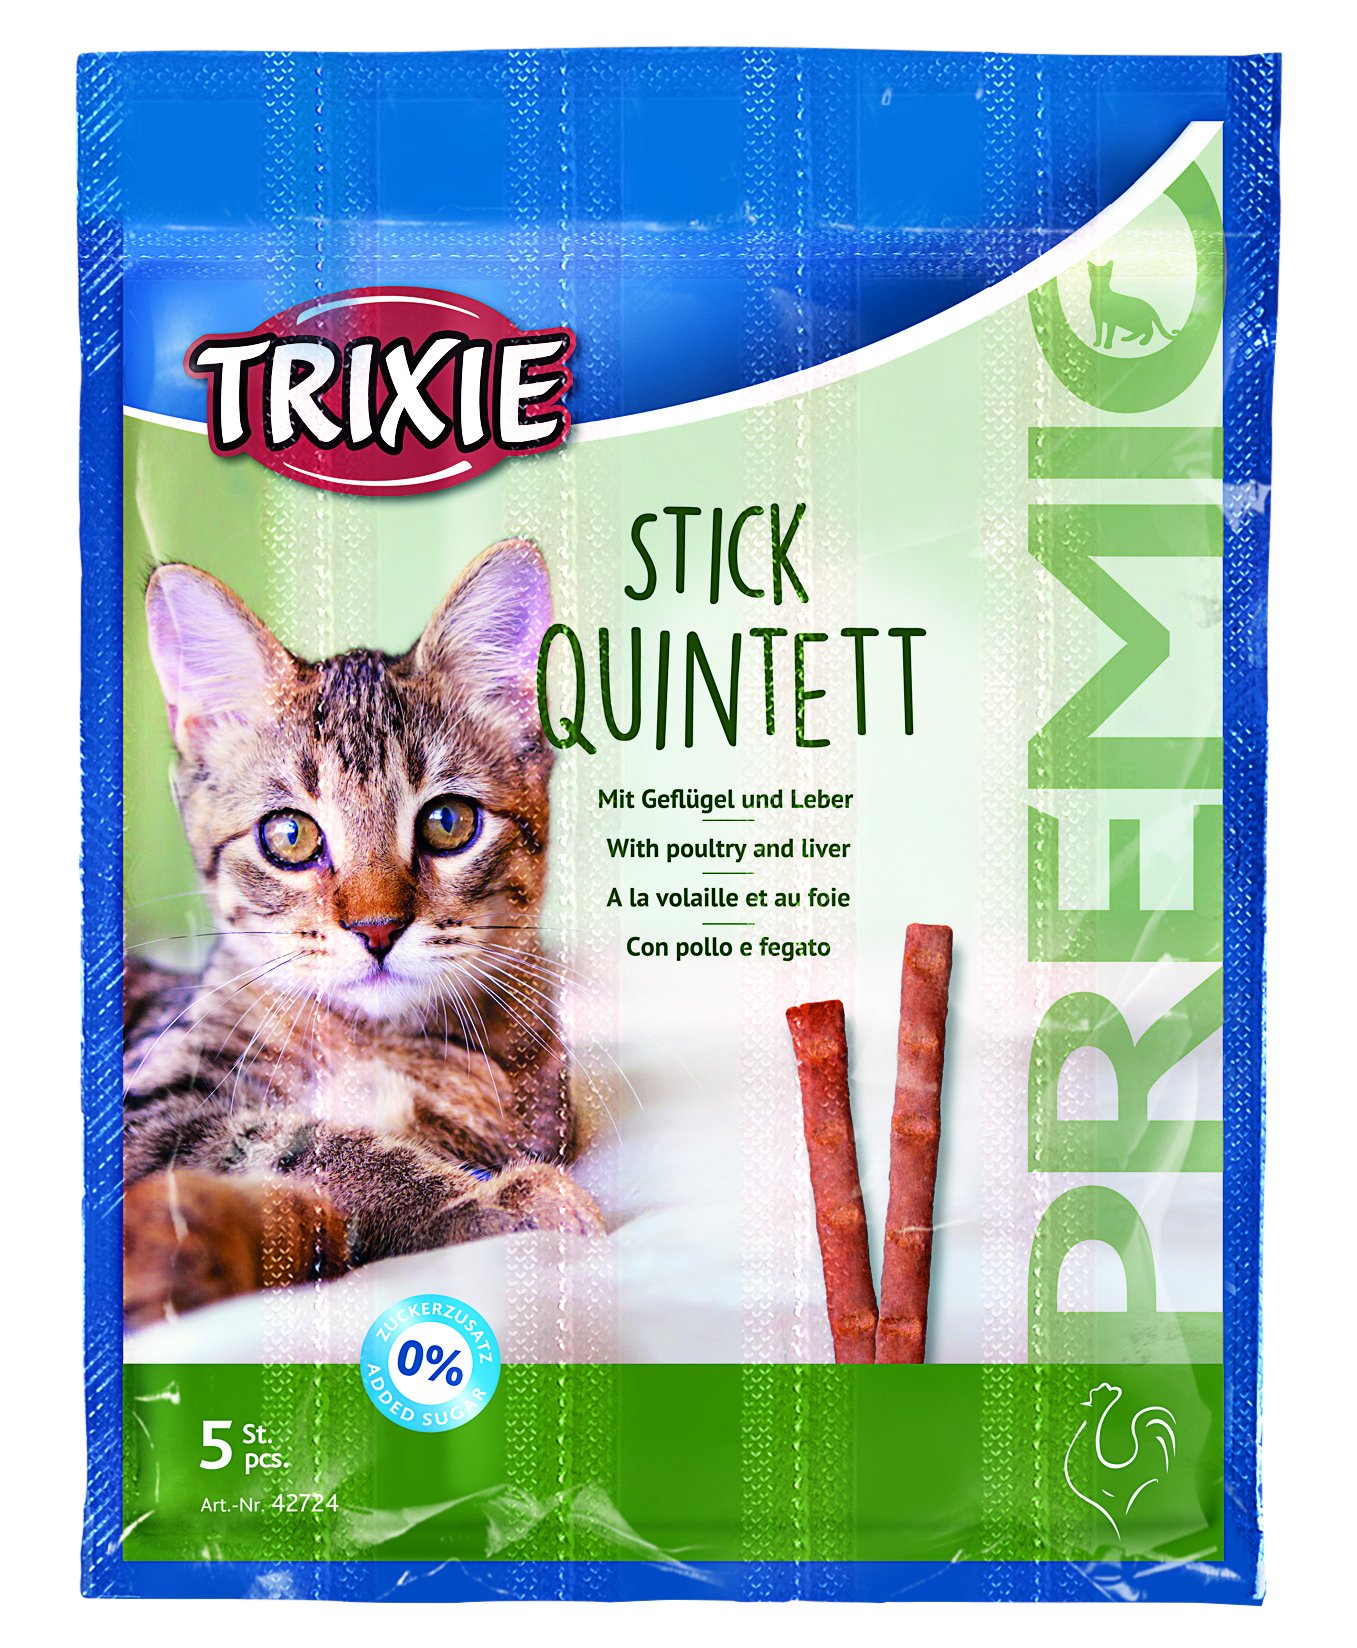 Trixie PREMIO Stick Quintett Fågel & Lever 5-pack